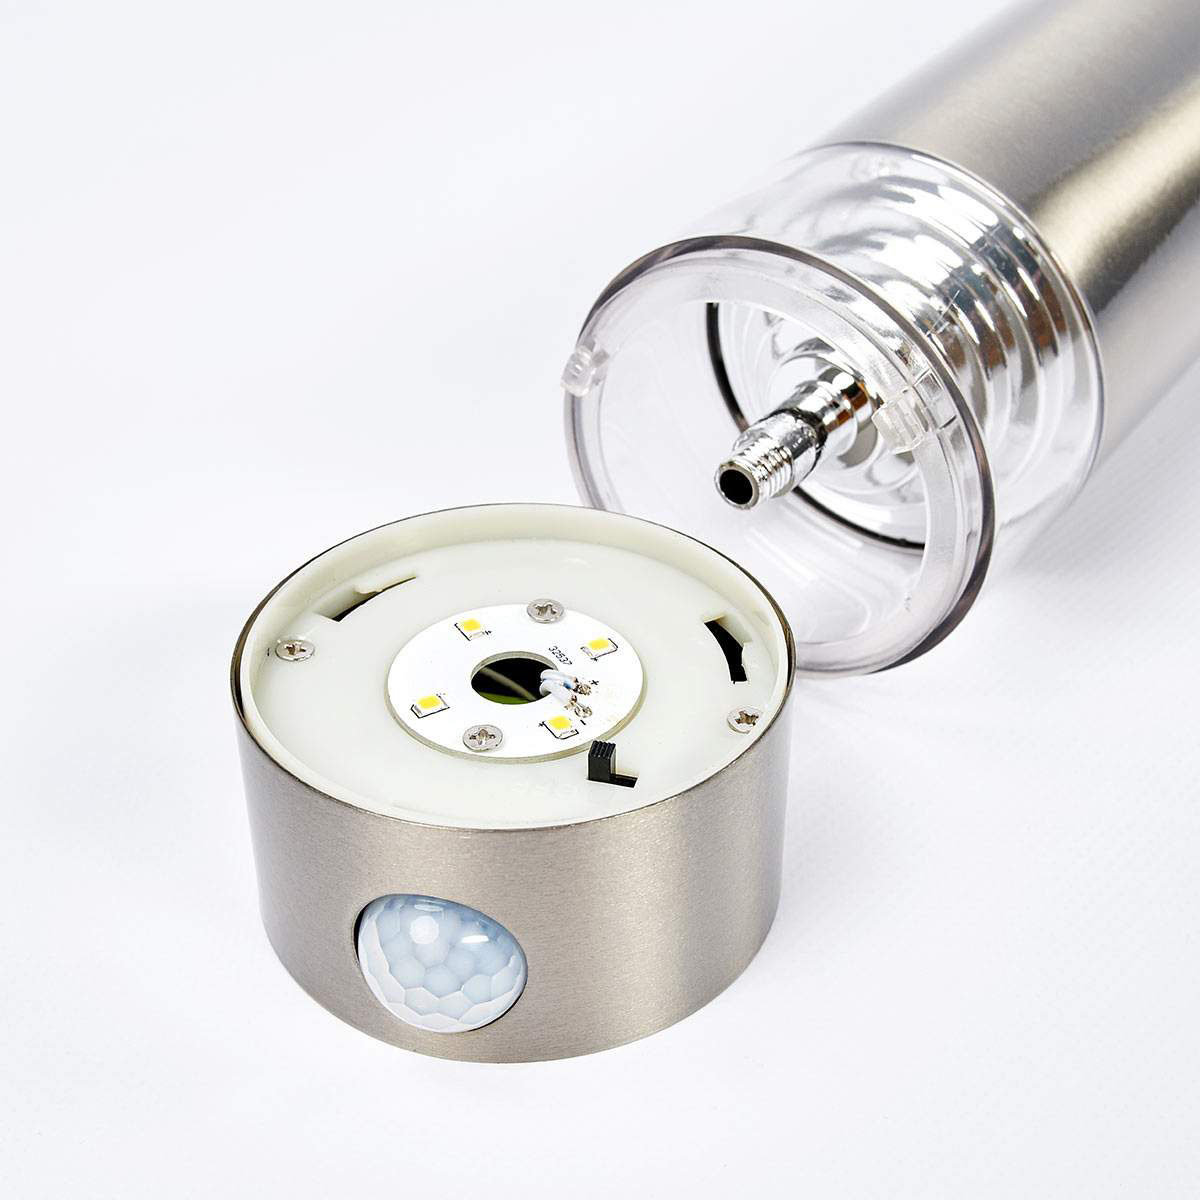 Solar-LED-Sockelleuchte Kalypso mit Bewegungsmelder, 50x7,8x7,8 cm, Edelstahl, silber
| #7